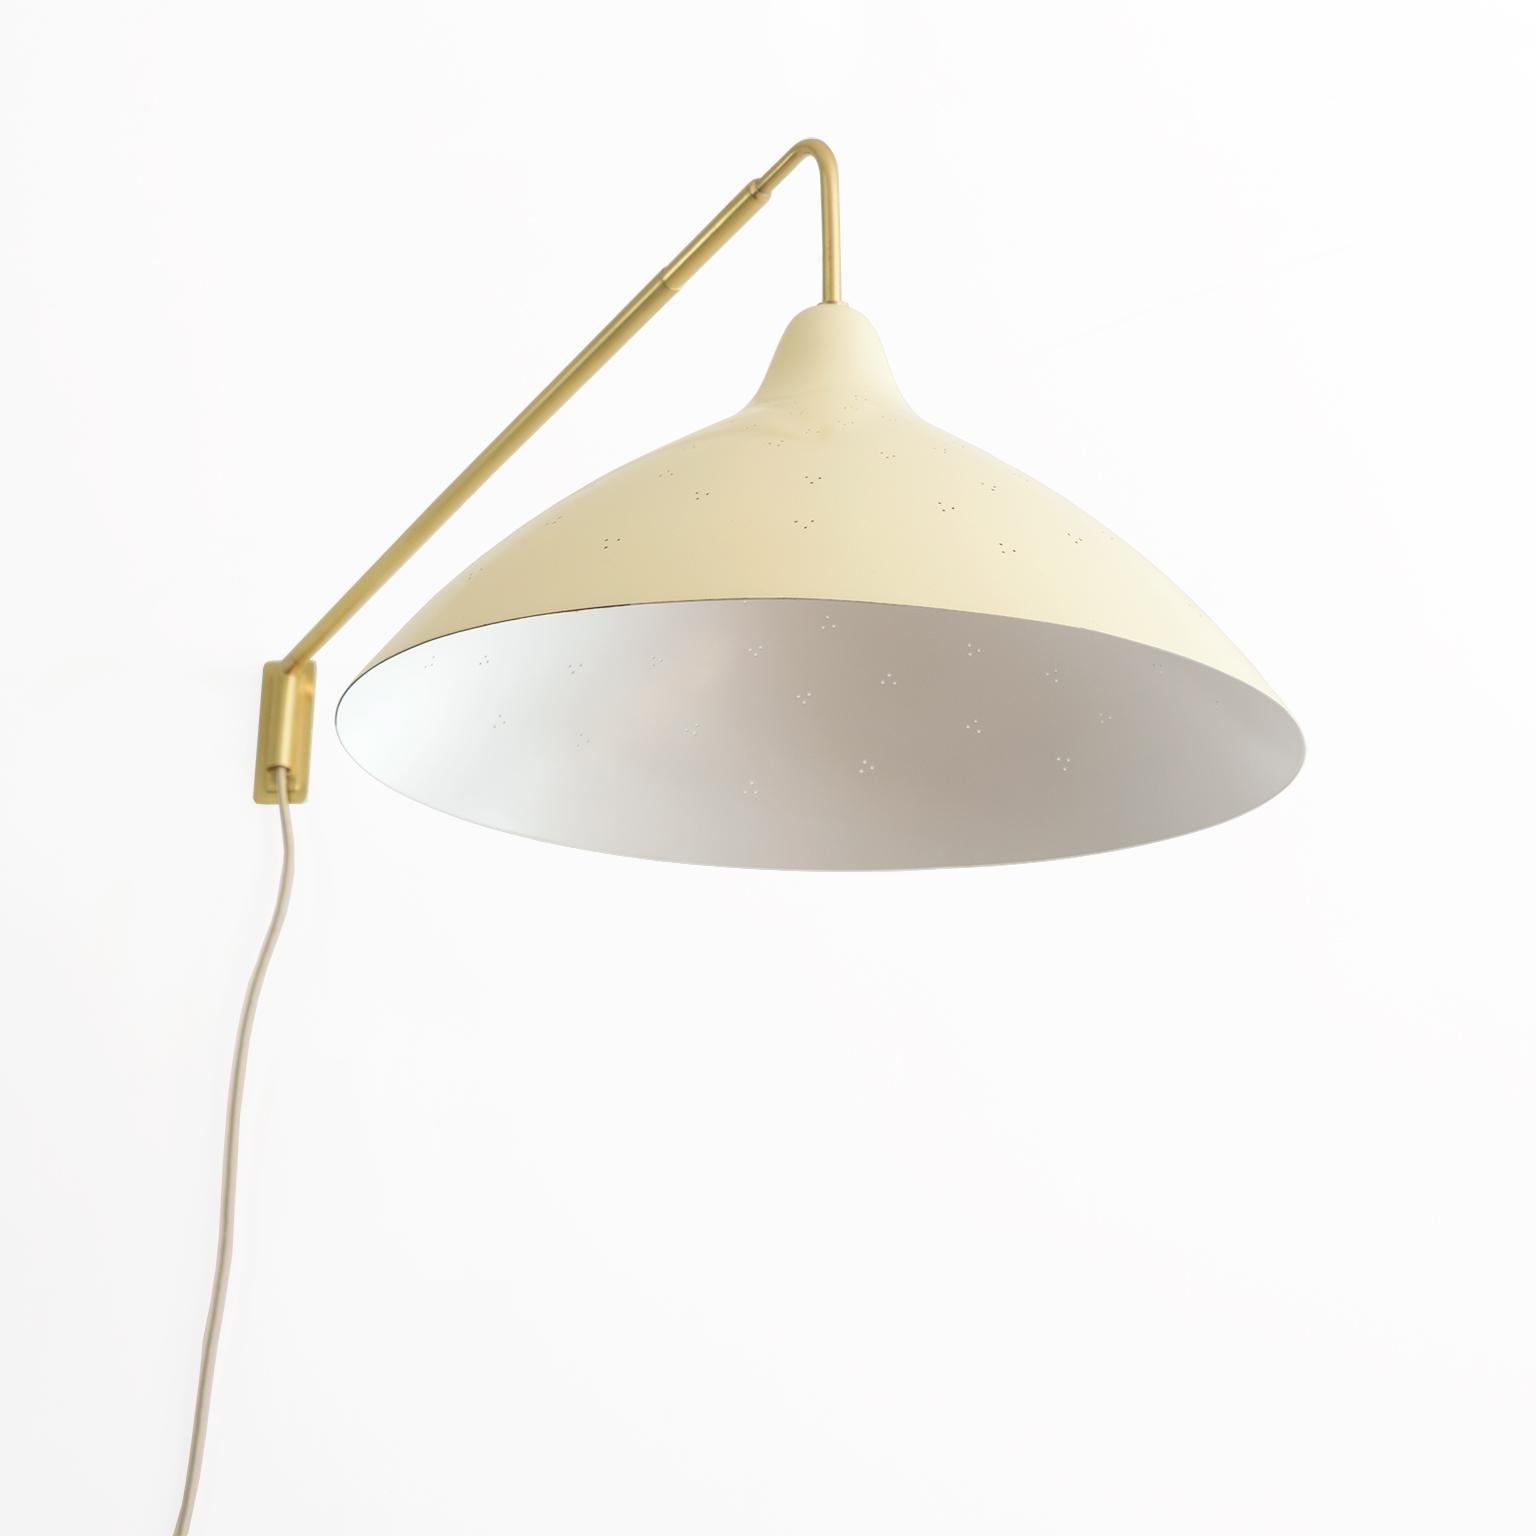 Scandinavian Lisa Johansson-Pape Adjustable Wall Mount Swing Arm Lamp Orno Finland For Sale